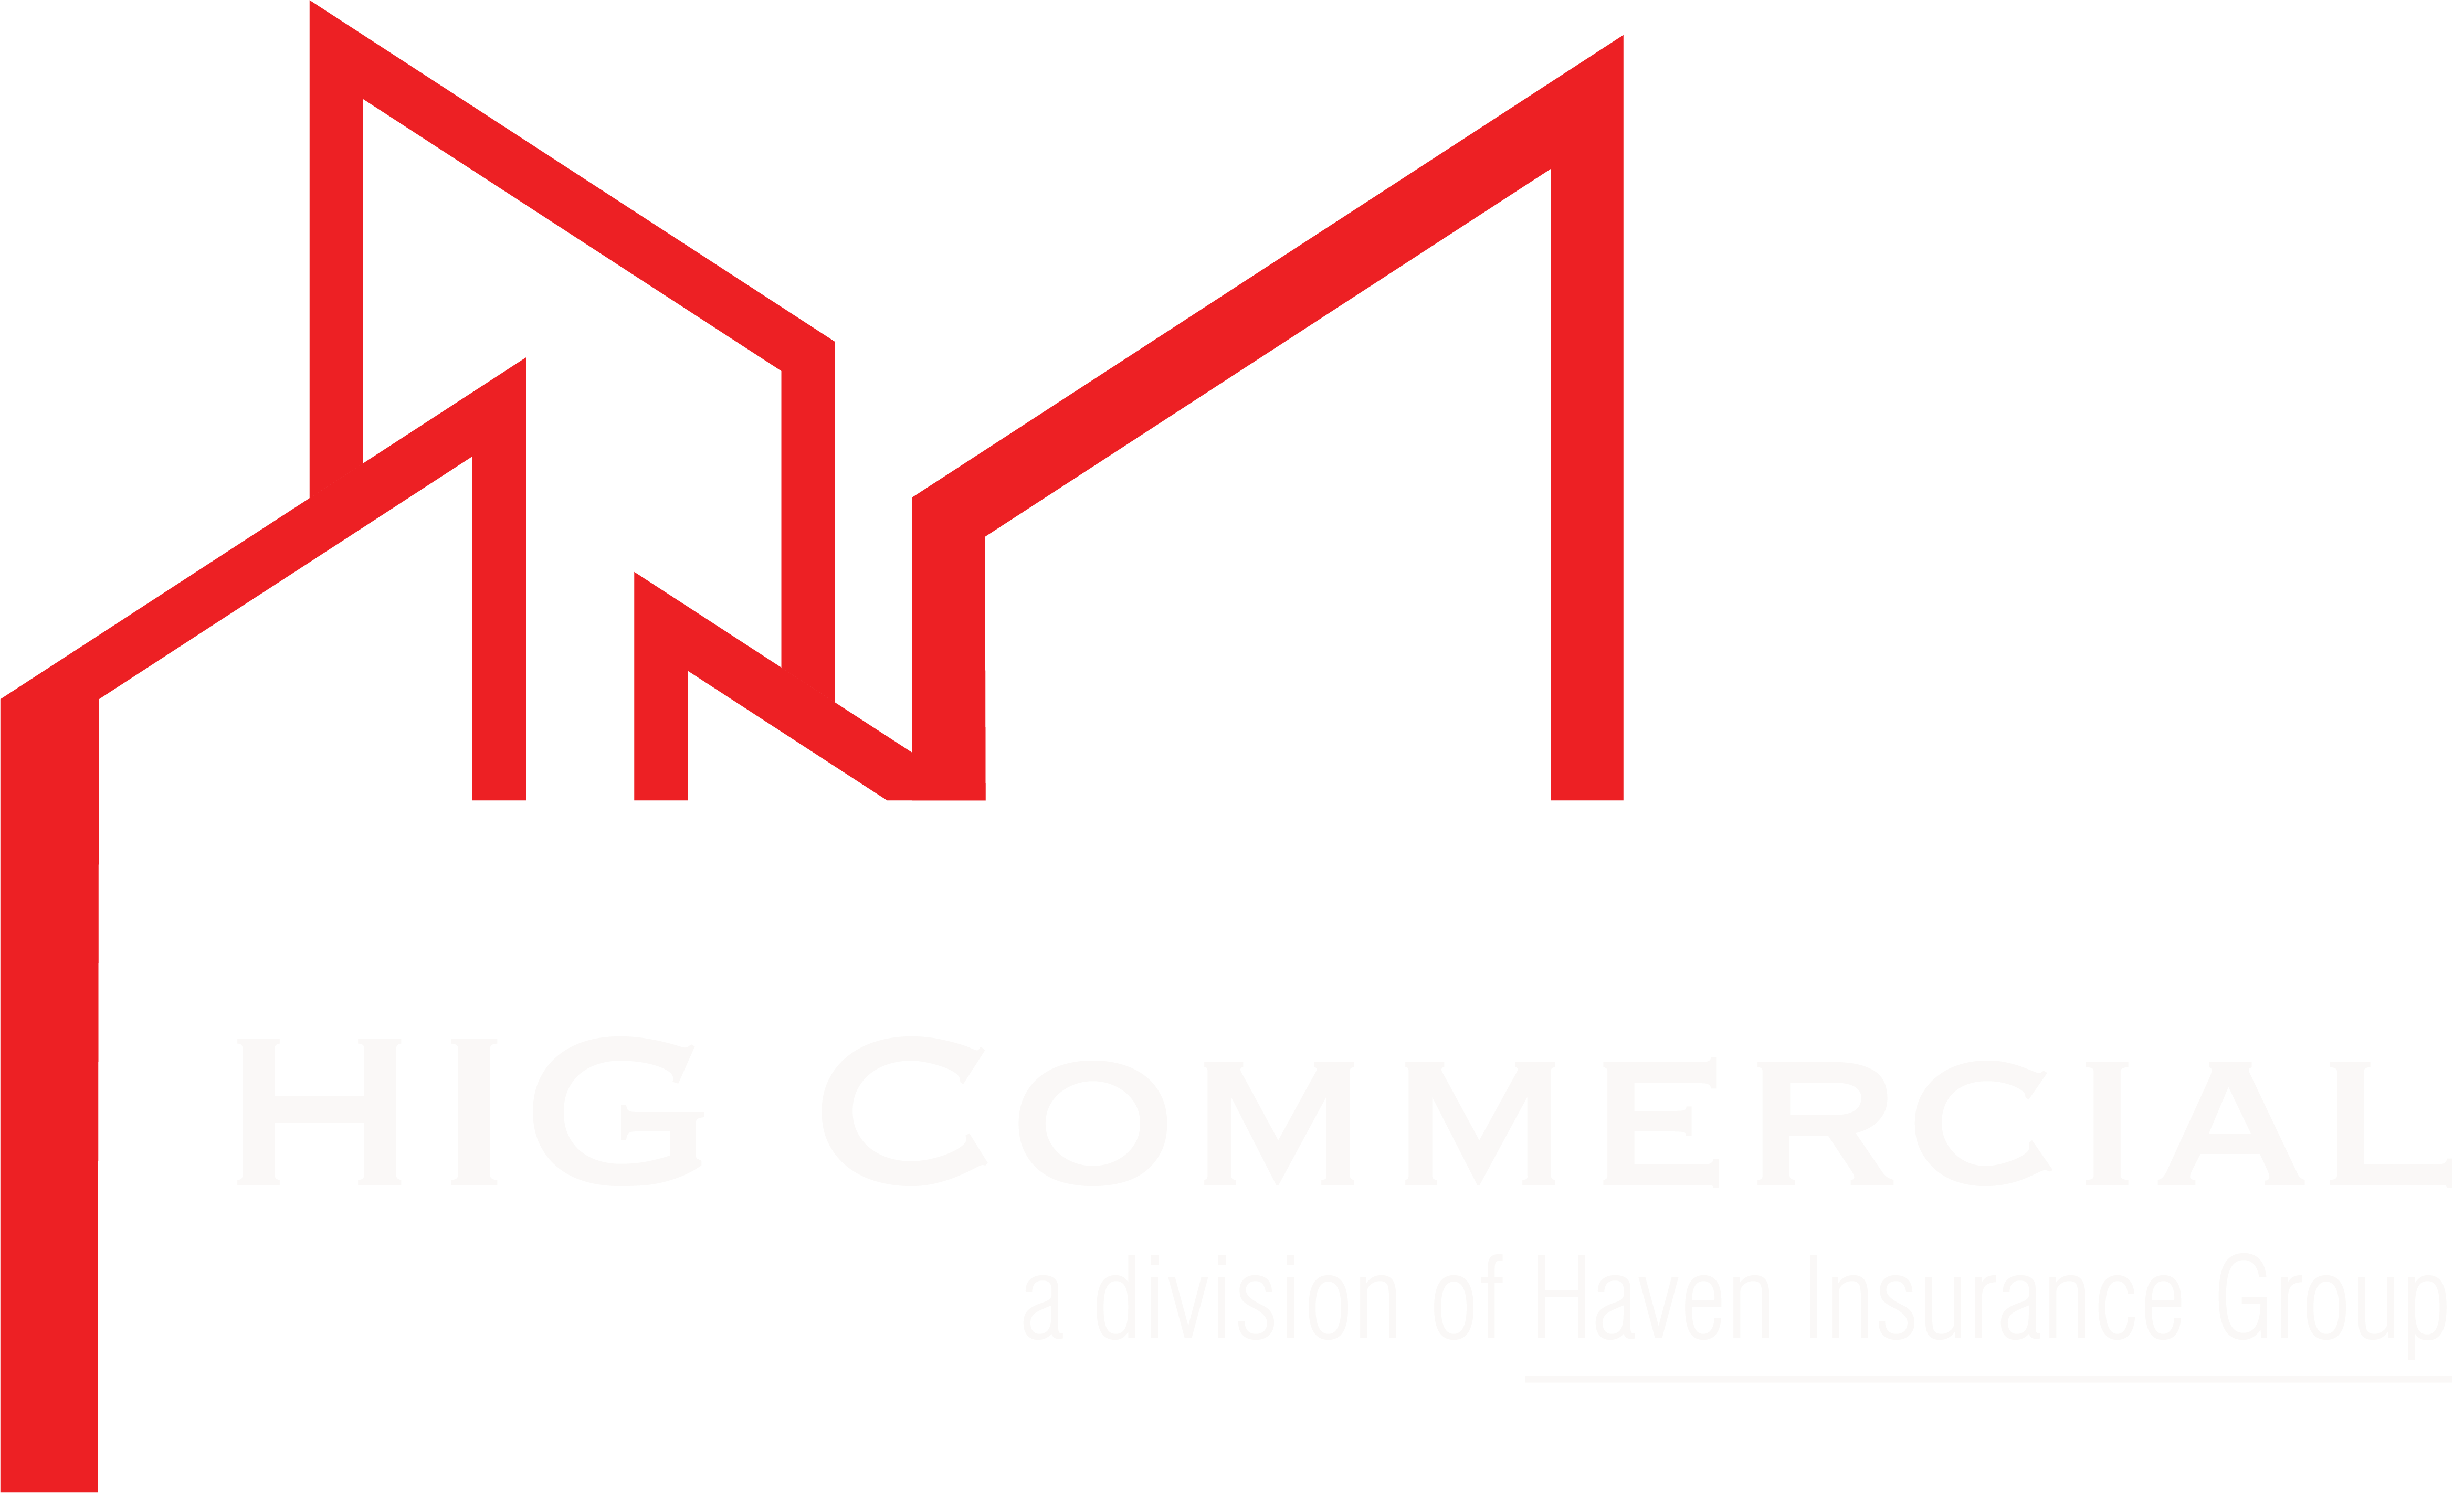 Haven Insurance Logo